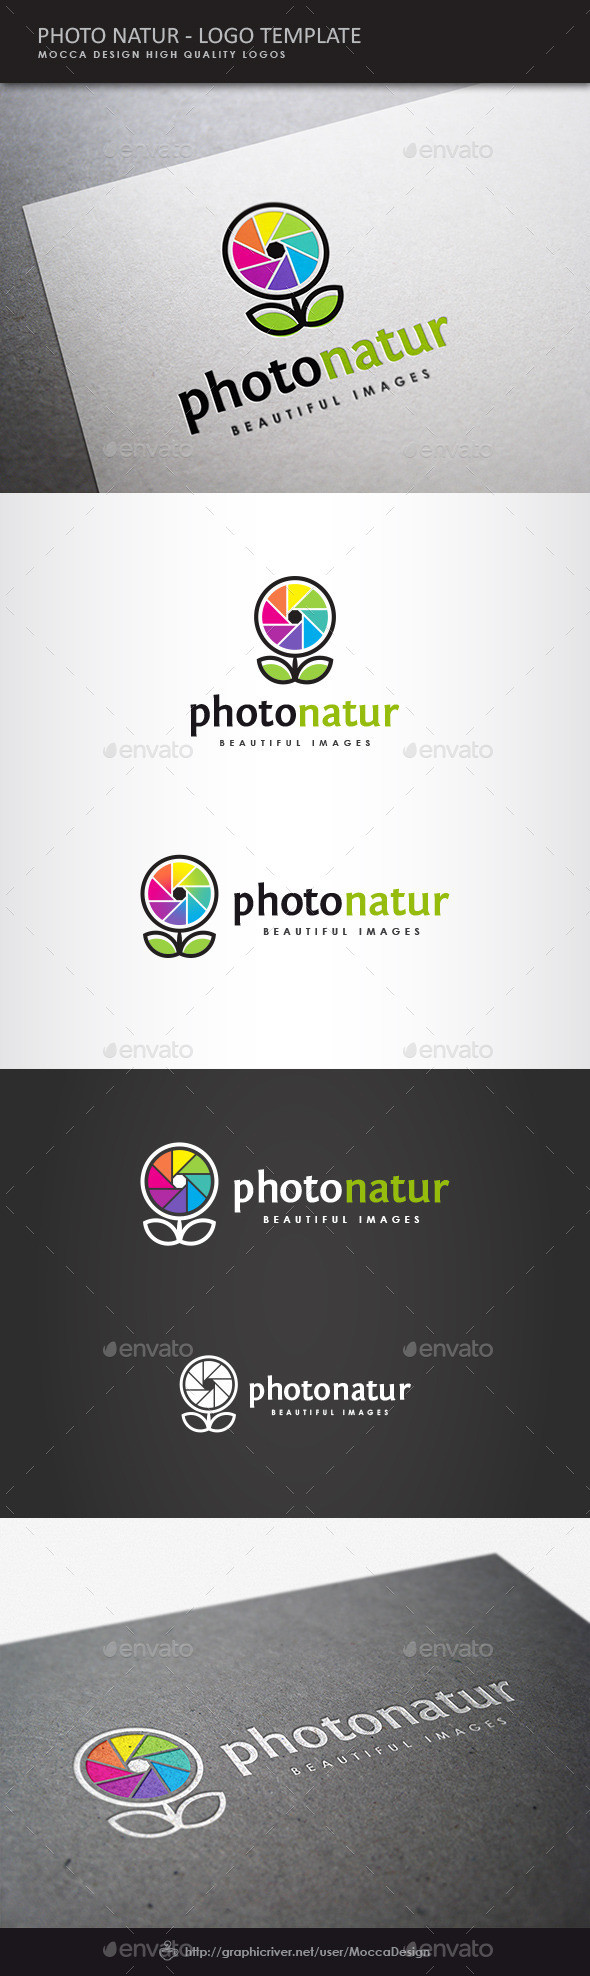 Preview photo natur logo mocca design